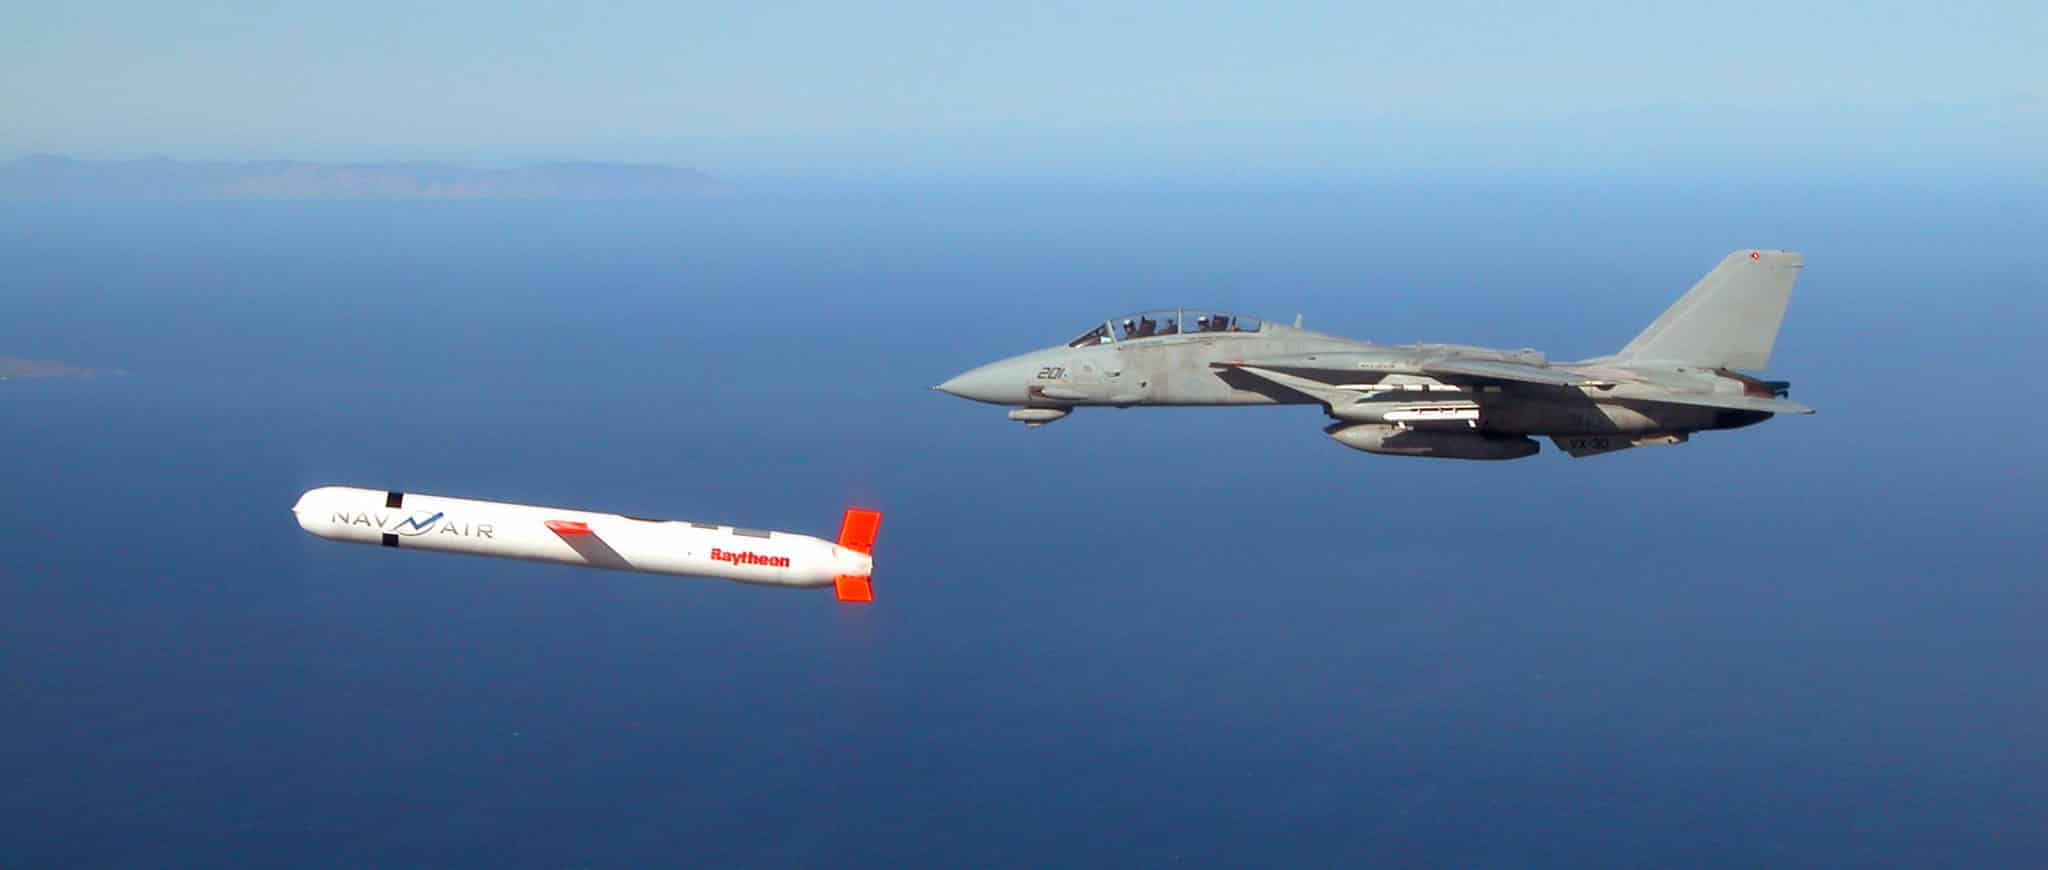 cruise missile vs tomahawk